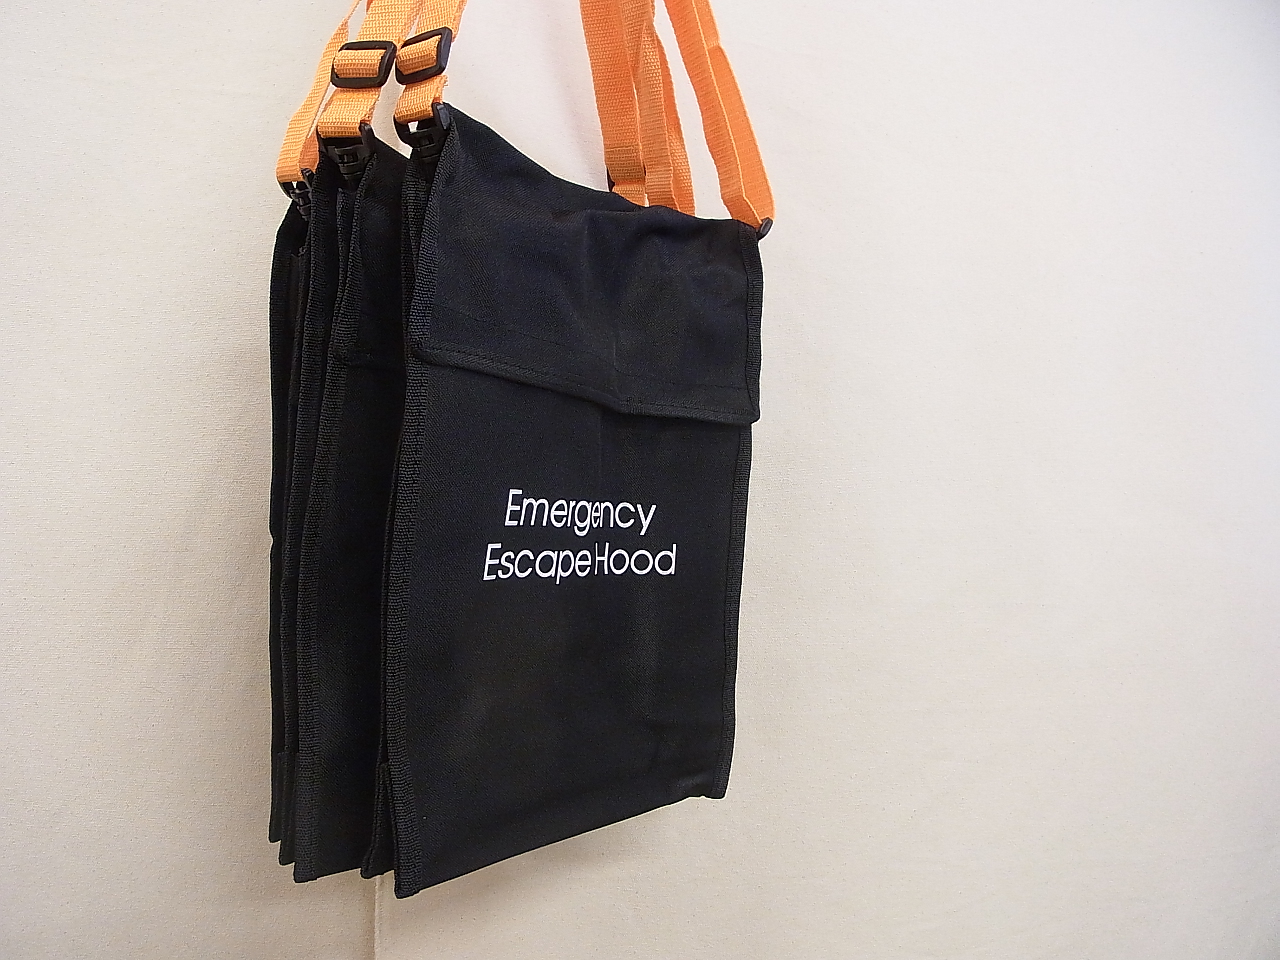 usmilitary-emergency-escape-hood-bag-20190405-6